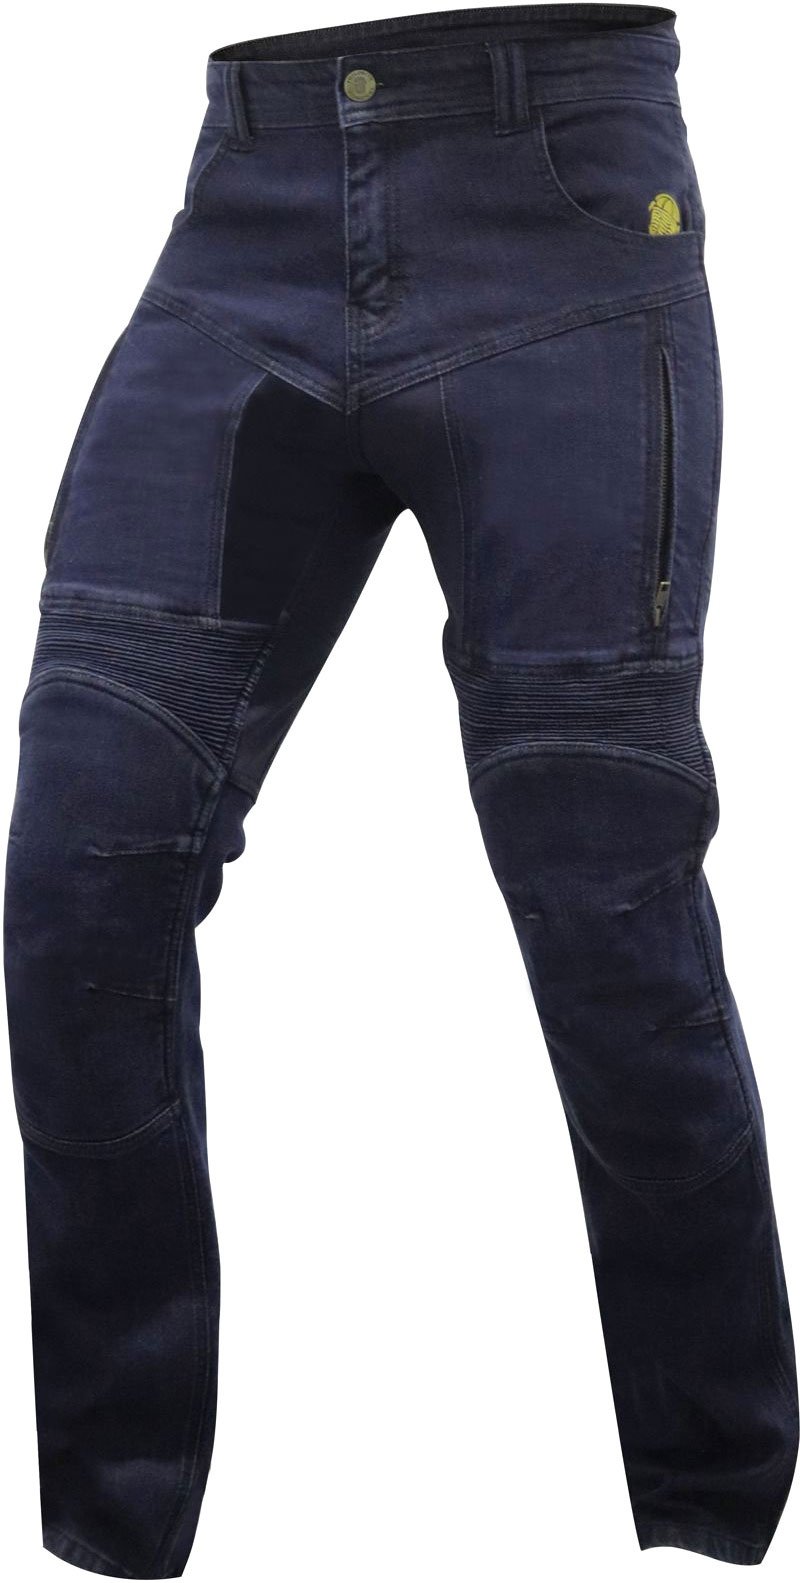 Trilobite Parado, jeans coupe ajustée - Bleu - 46